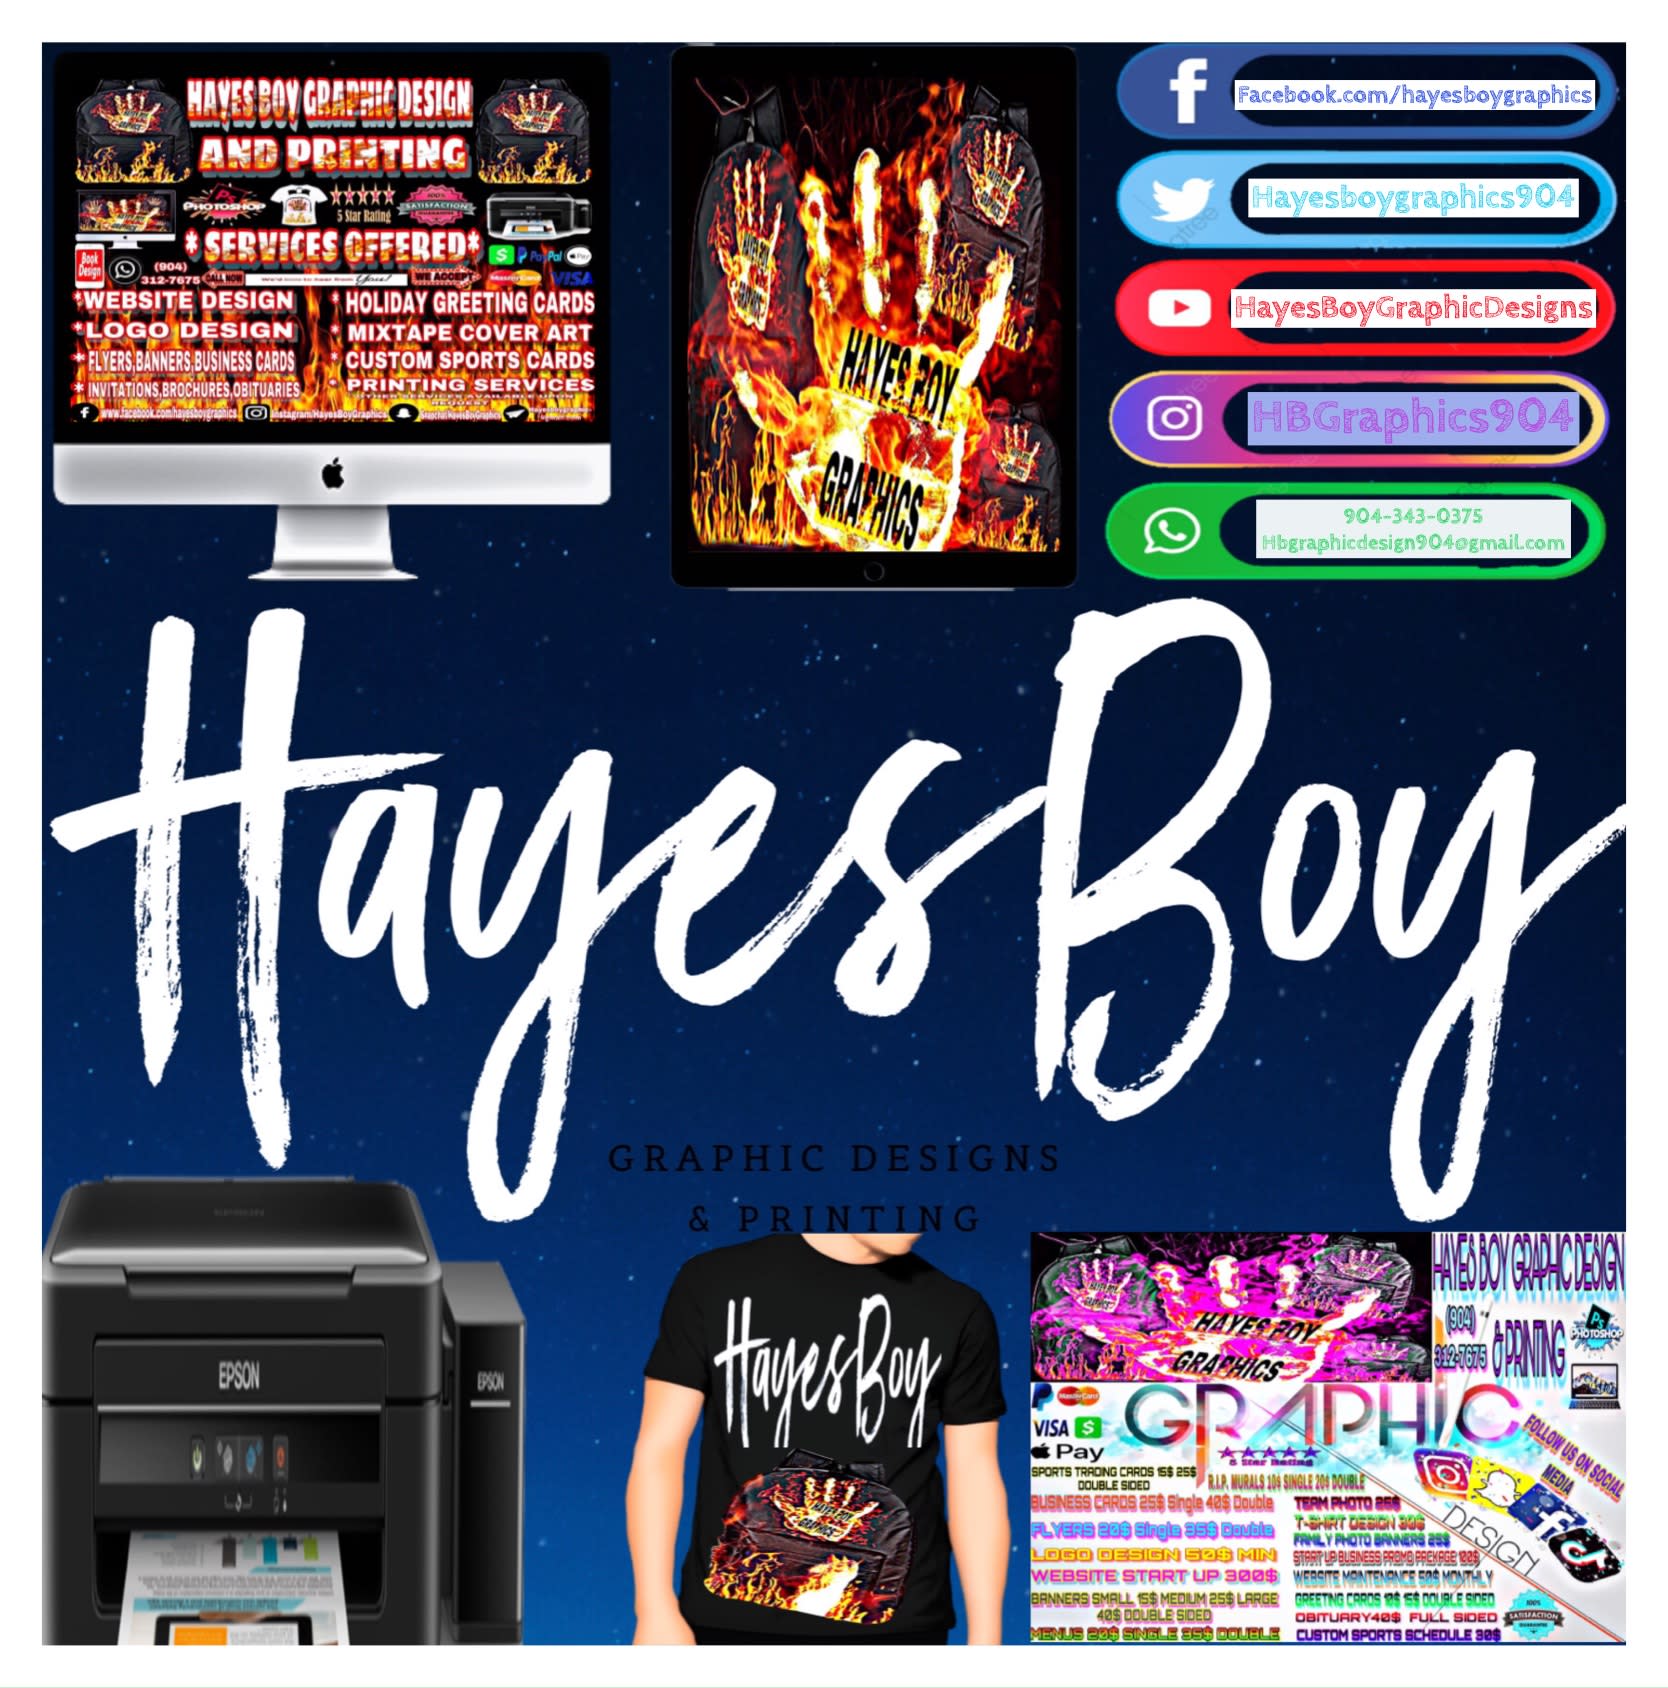 Hayes Boy Graphic Designs